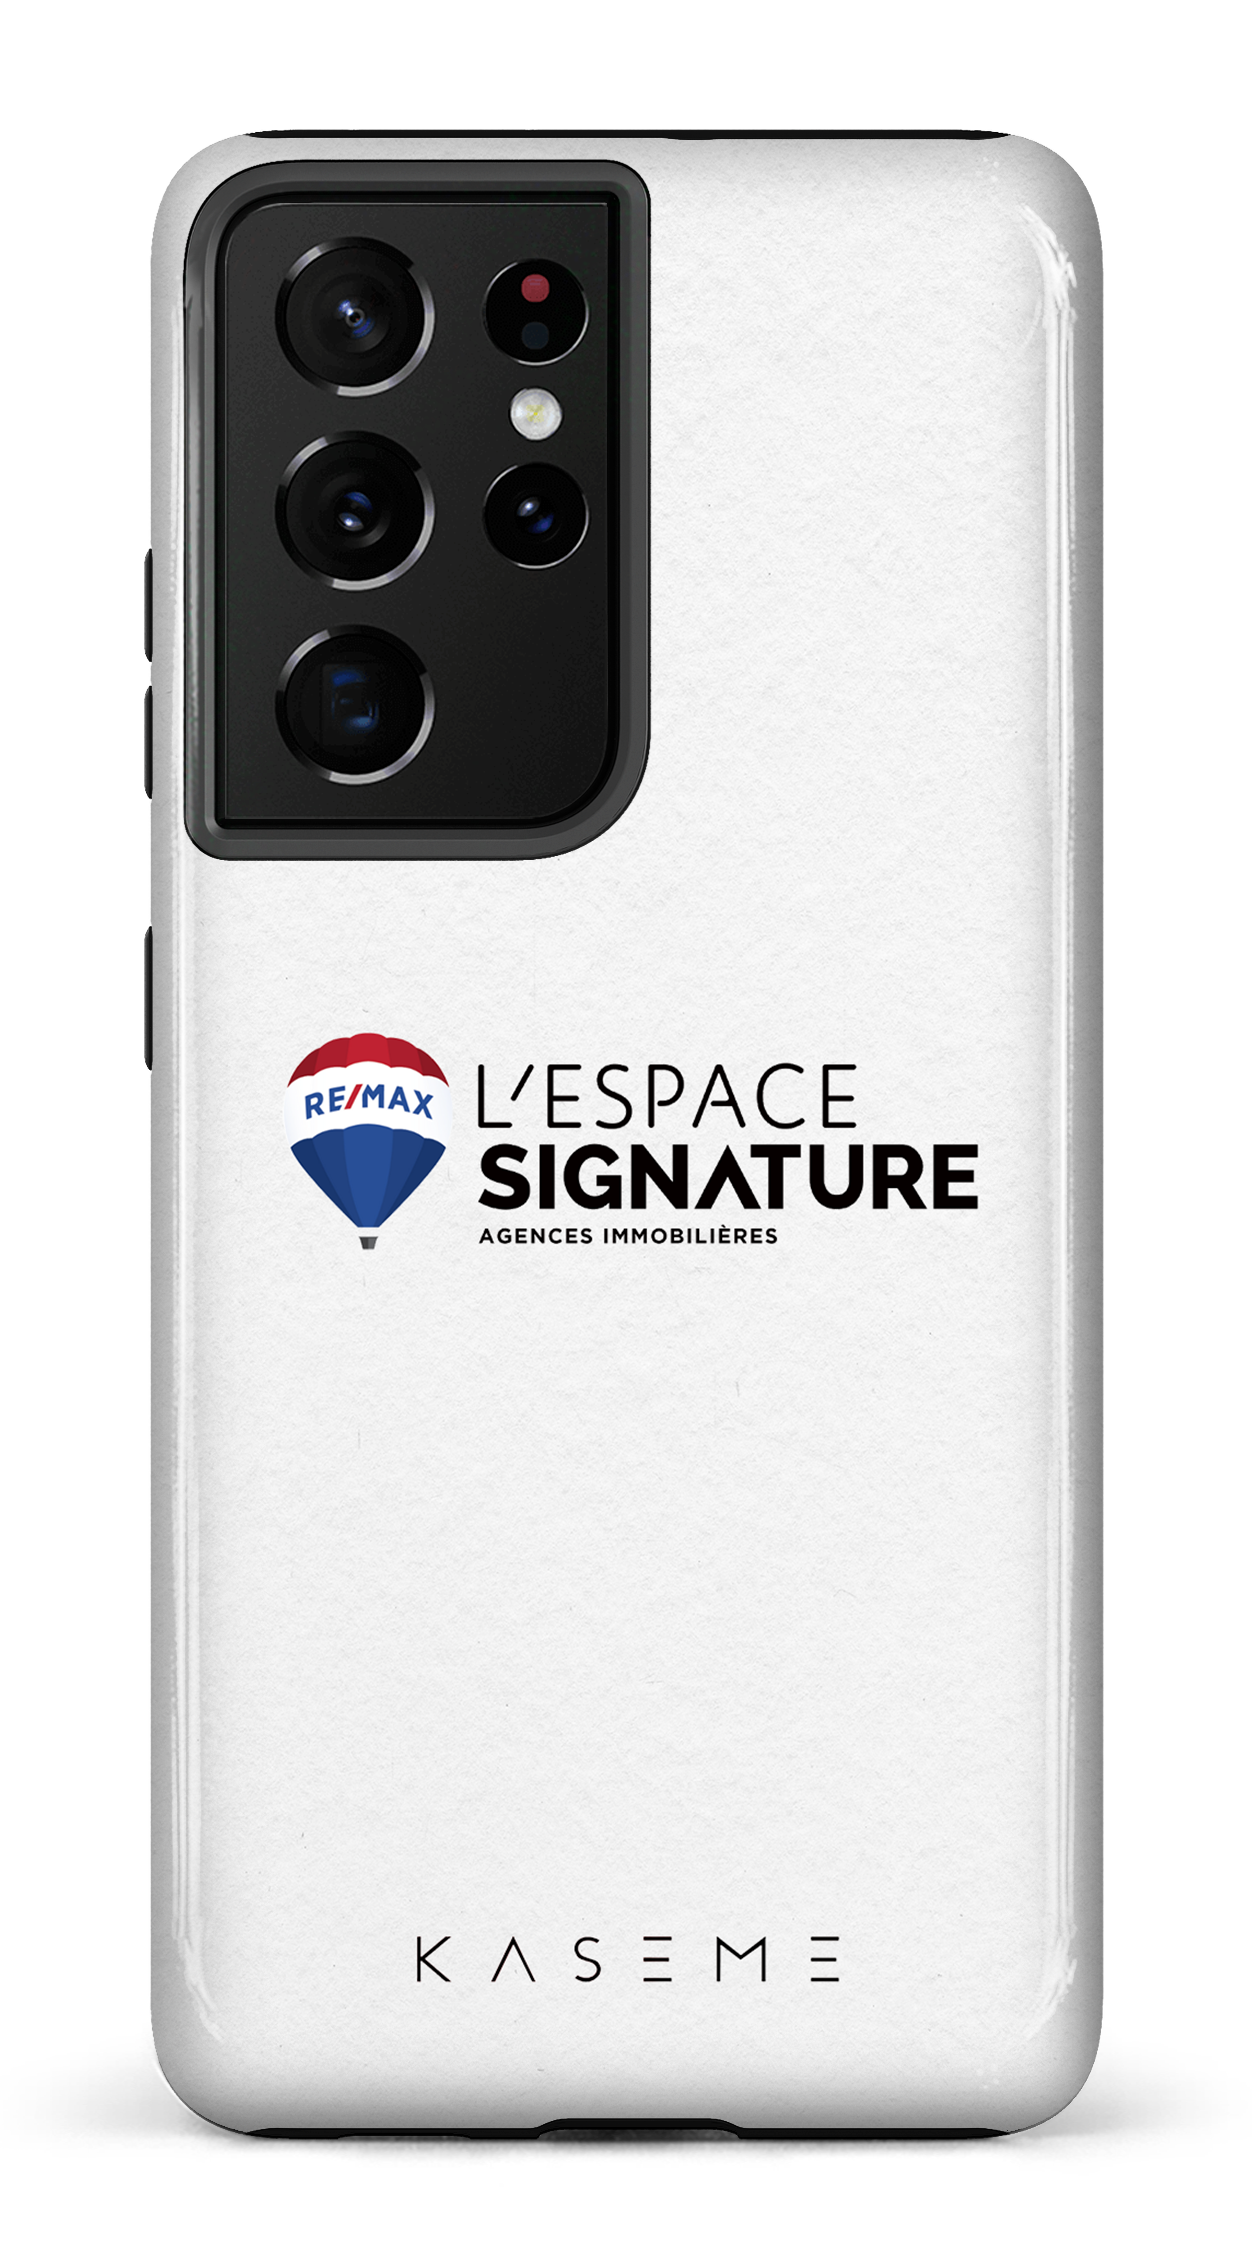 Remax Signature L'Espace Blanc - Galaxy S21 Ultra